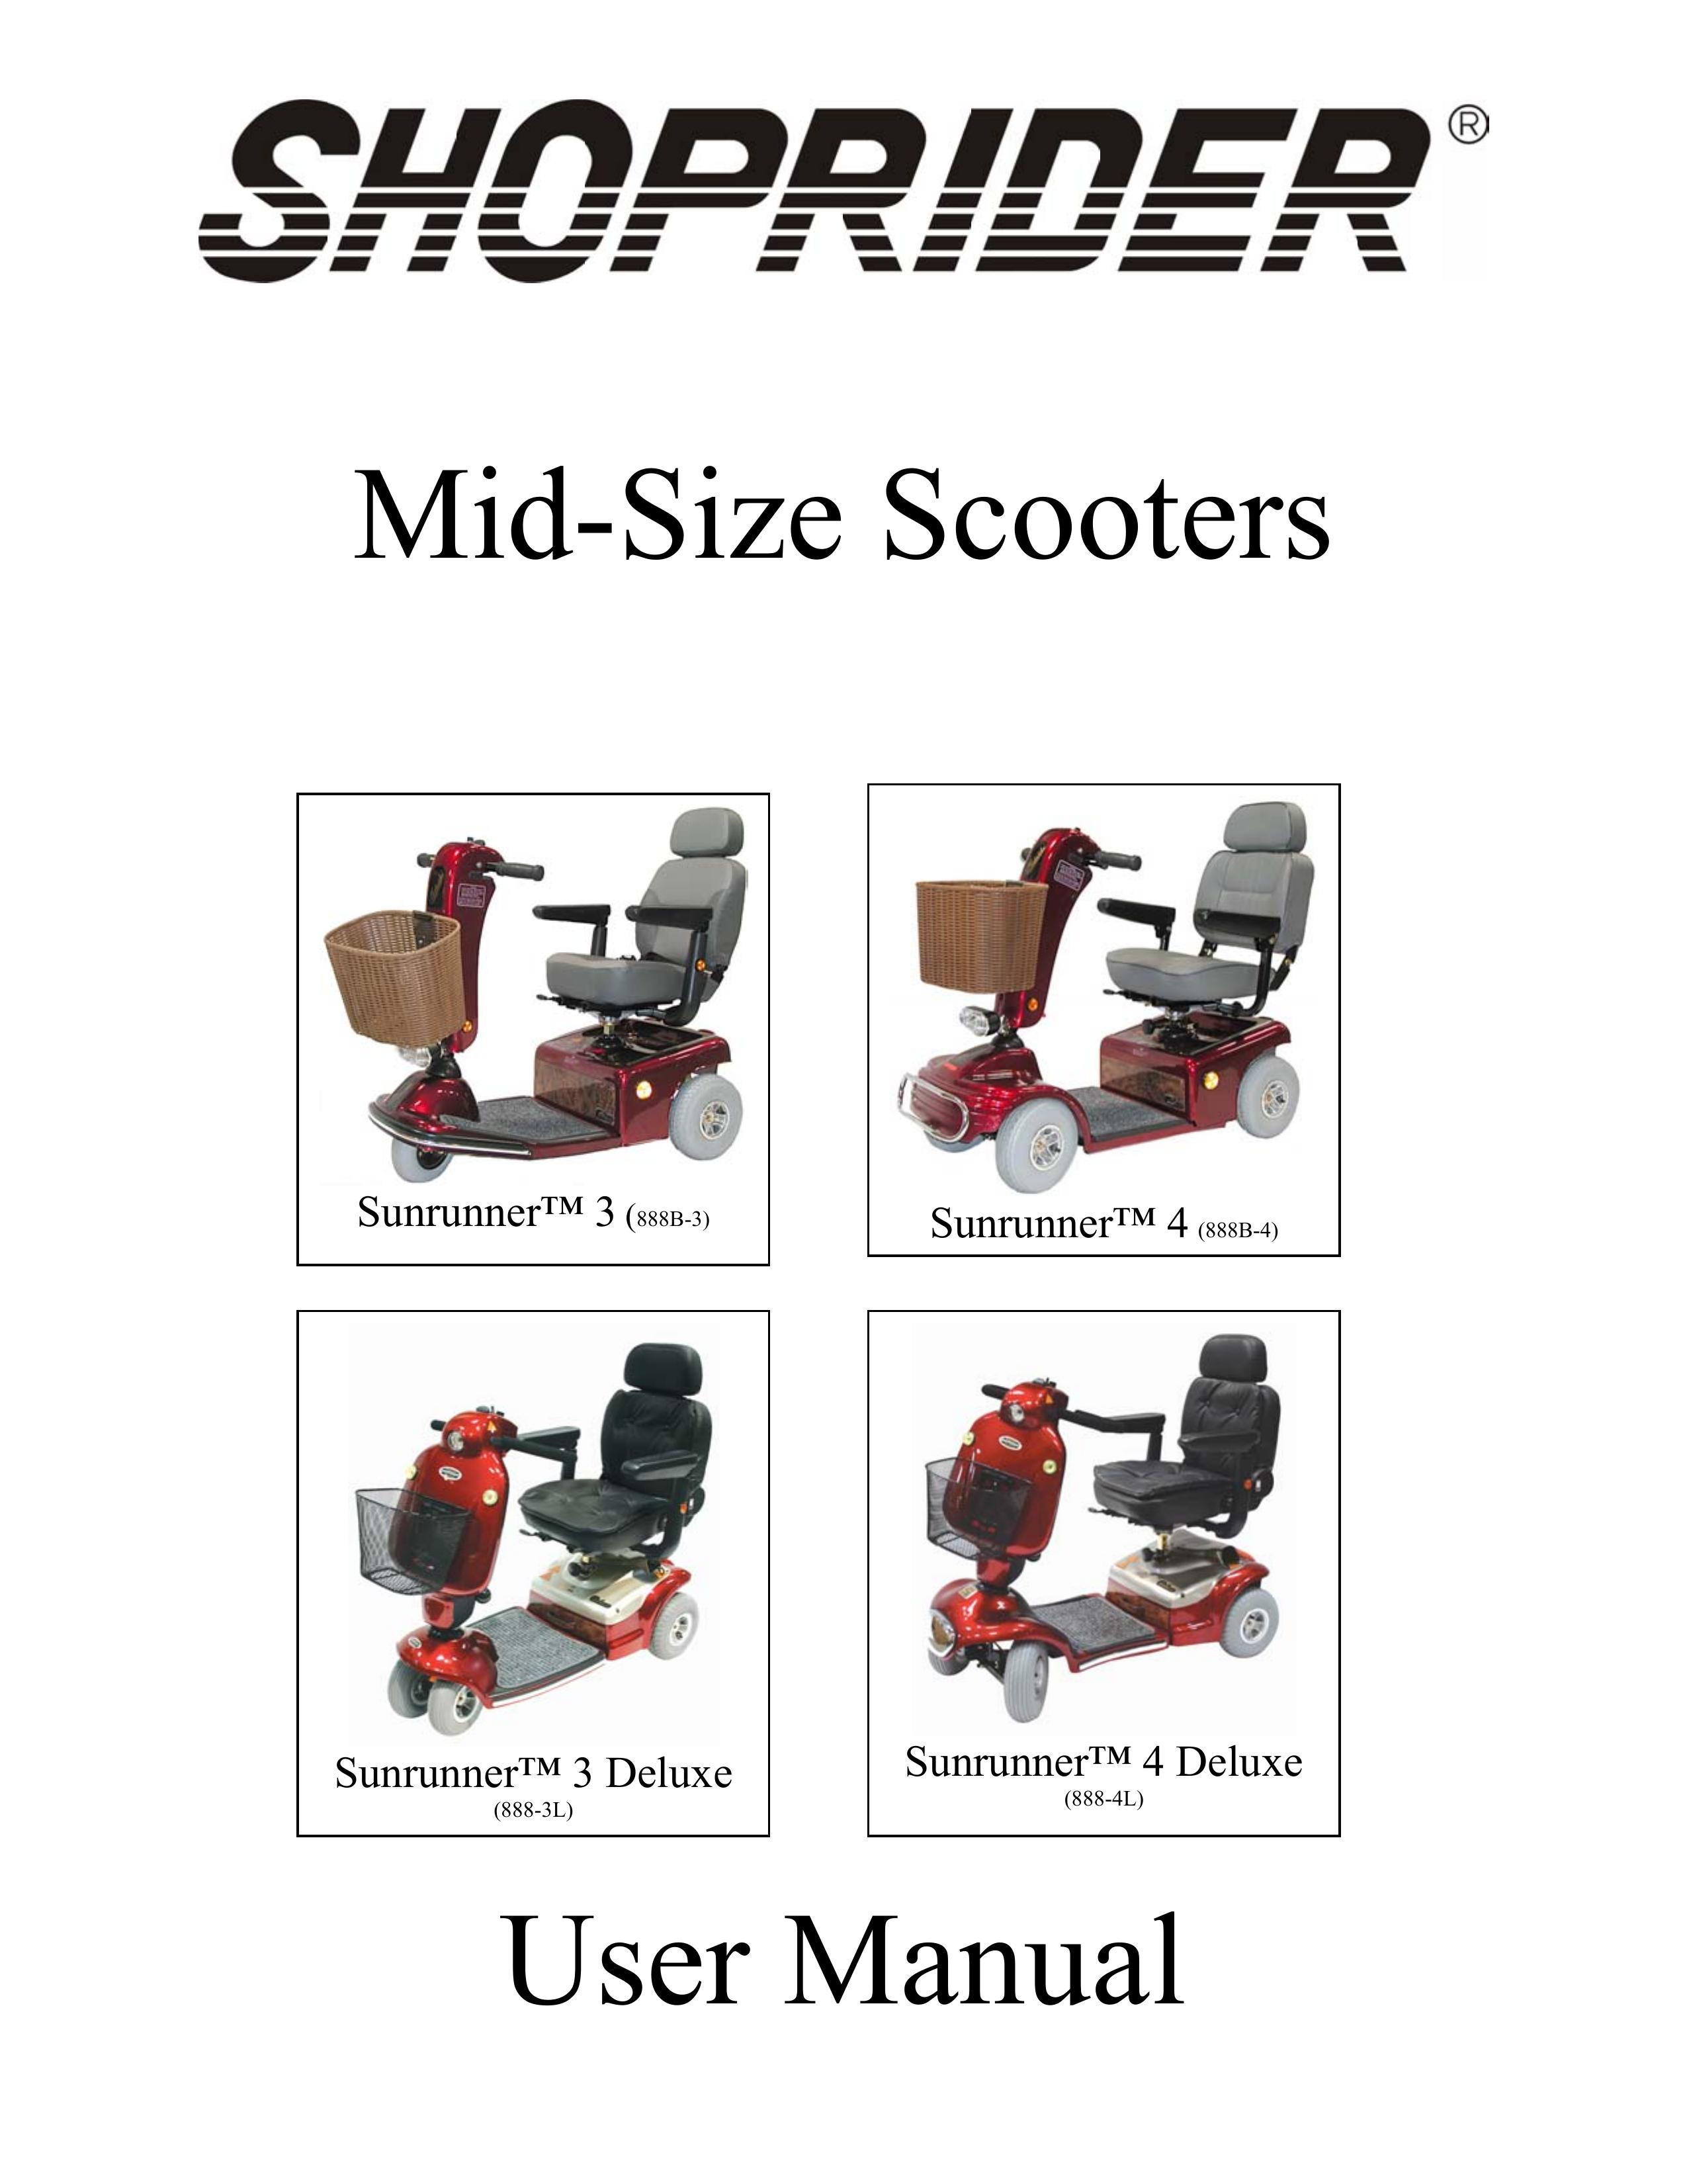 Shoprider (888-3L) Mobility Aid User Manual